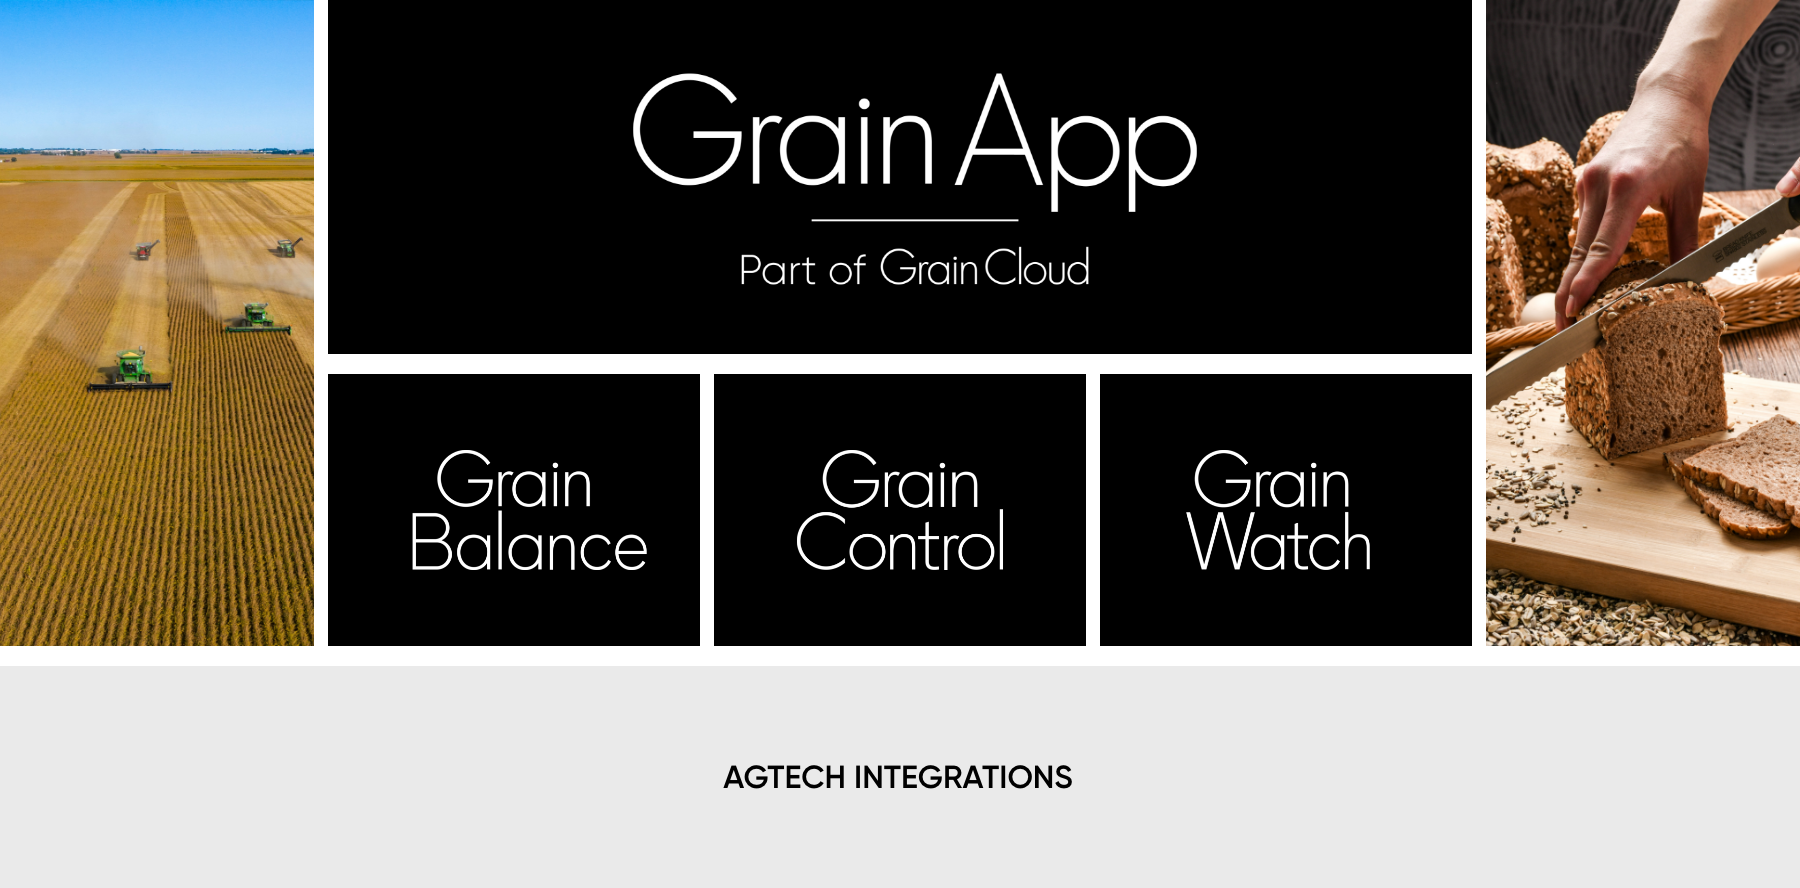 Grain App Services